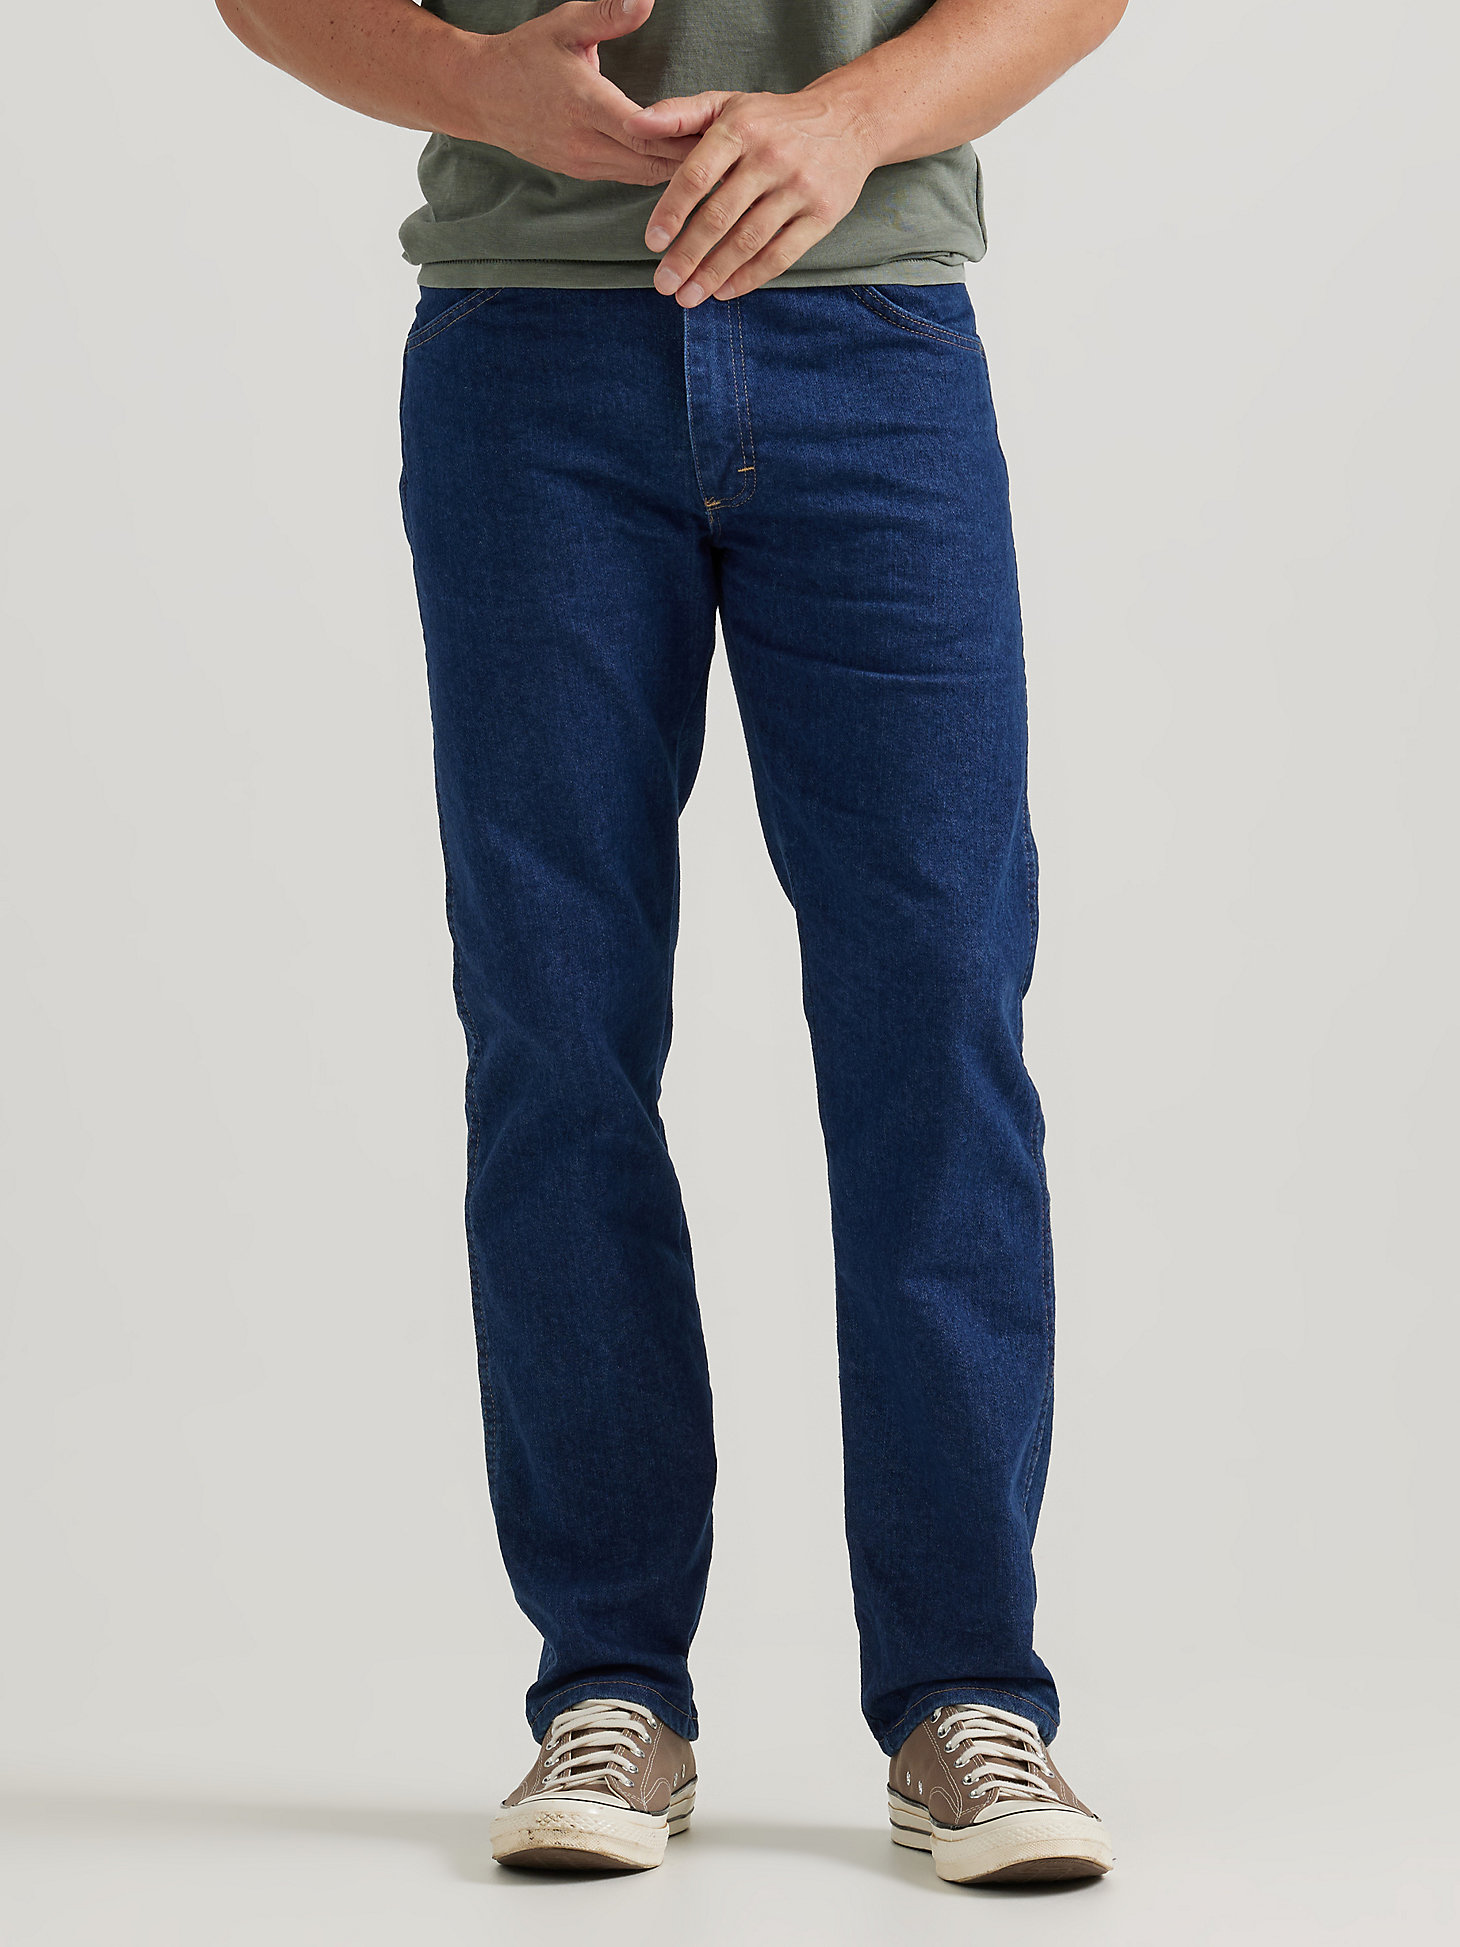 Wrangler Men's Texas Medium Stretch Jeans